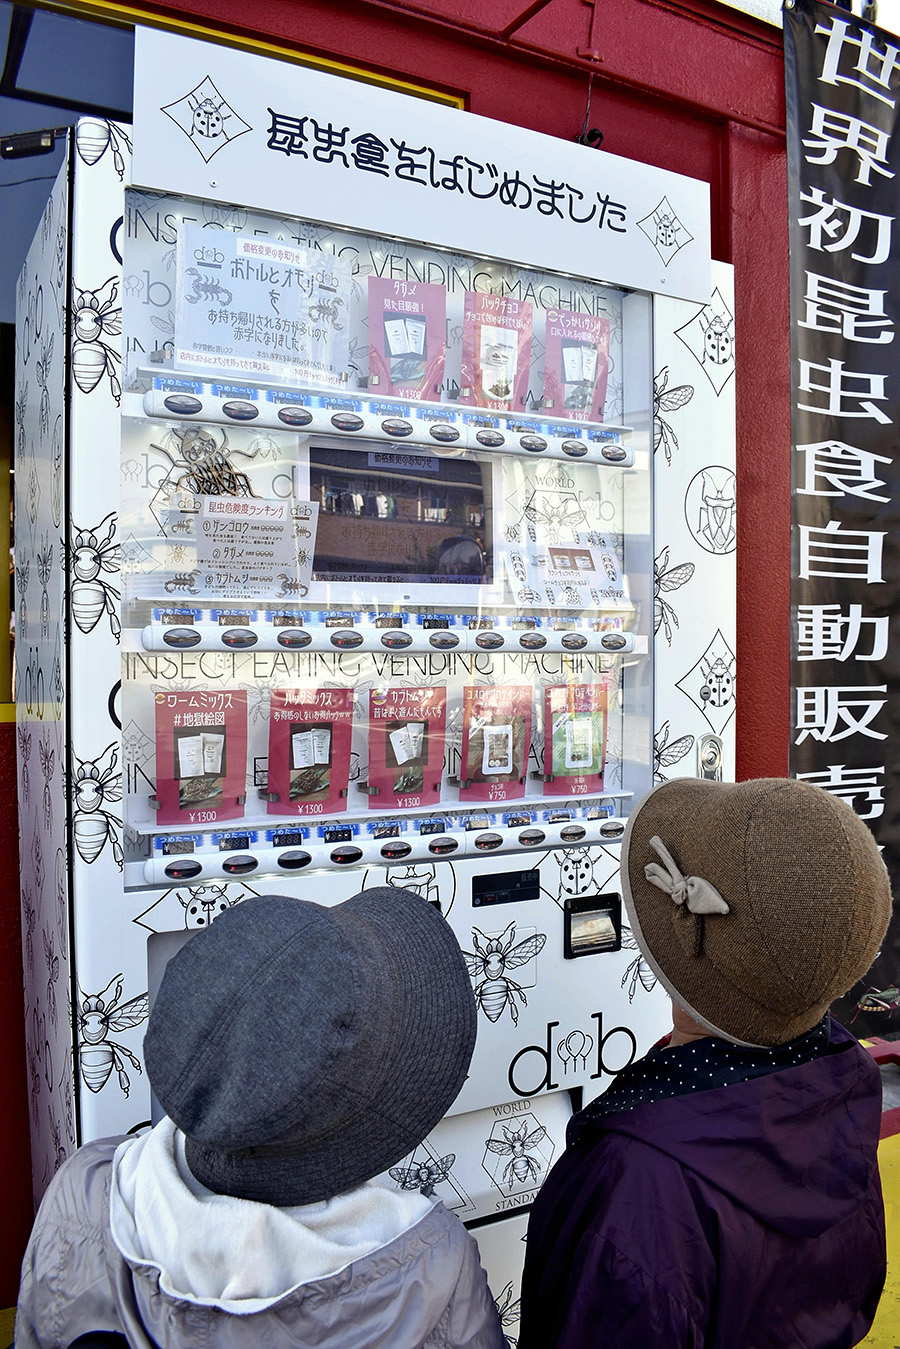 Japan vending machine sells bugs to eat